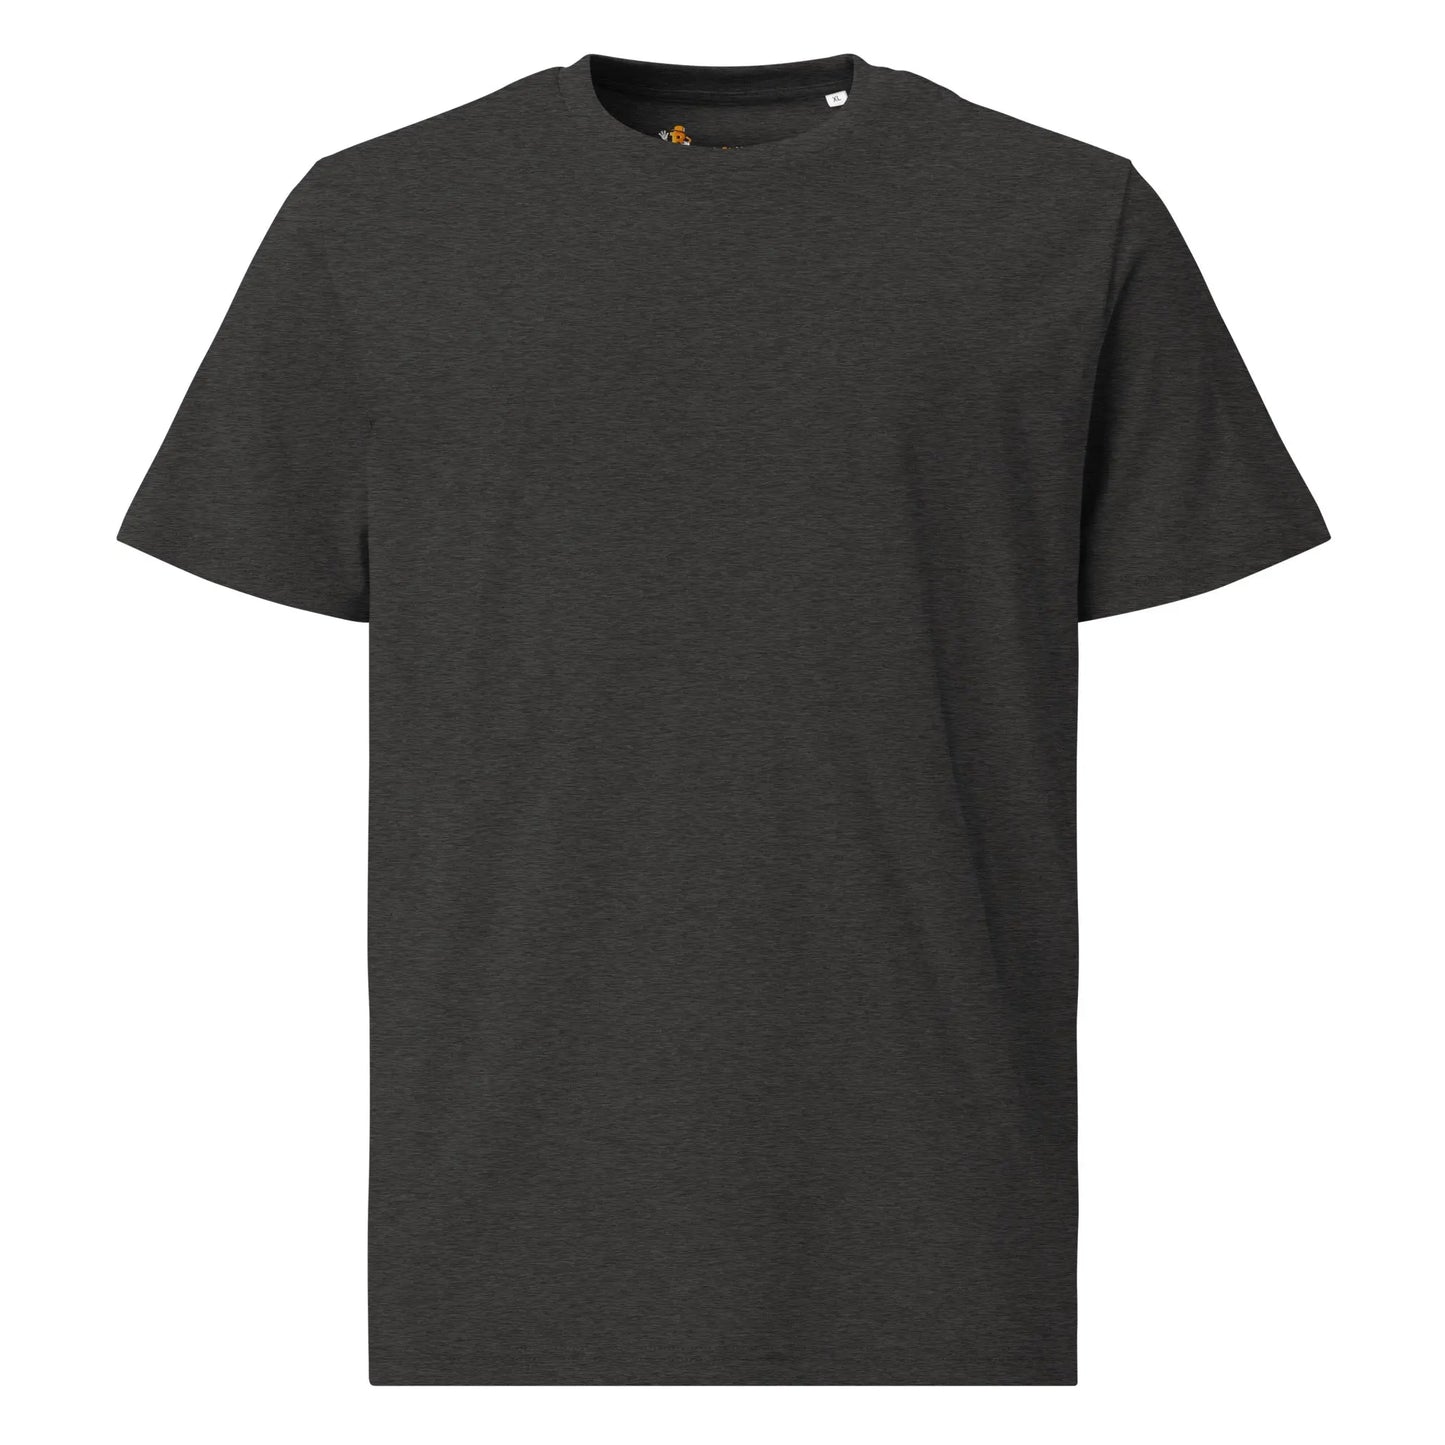 Satoshi 21 - Premium Unisex Organic Cotton Bitcoin T-shirt - Back Print Grey Color